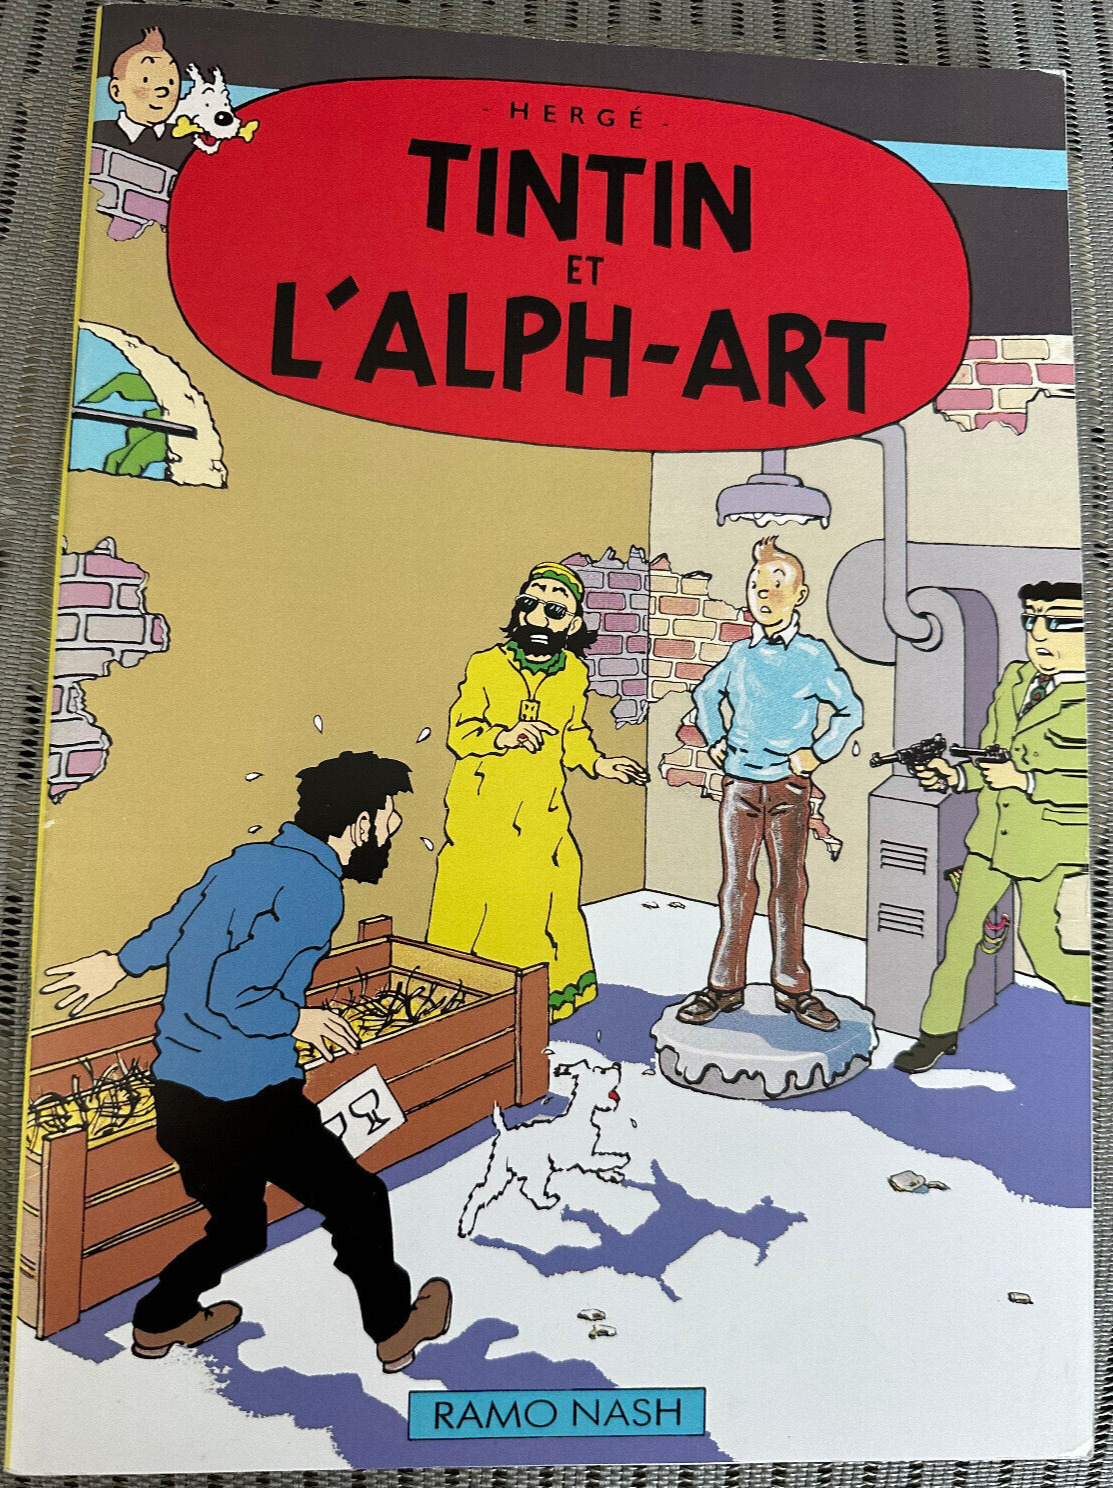 Tintin et L'Alph-Art - Ramo Nash - Geneva 1988 RARE 150 only